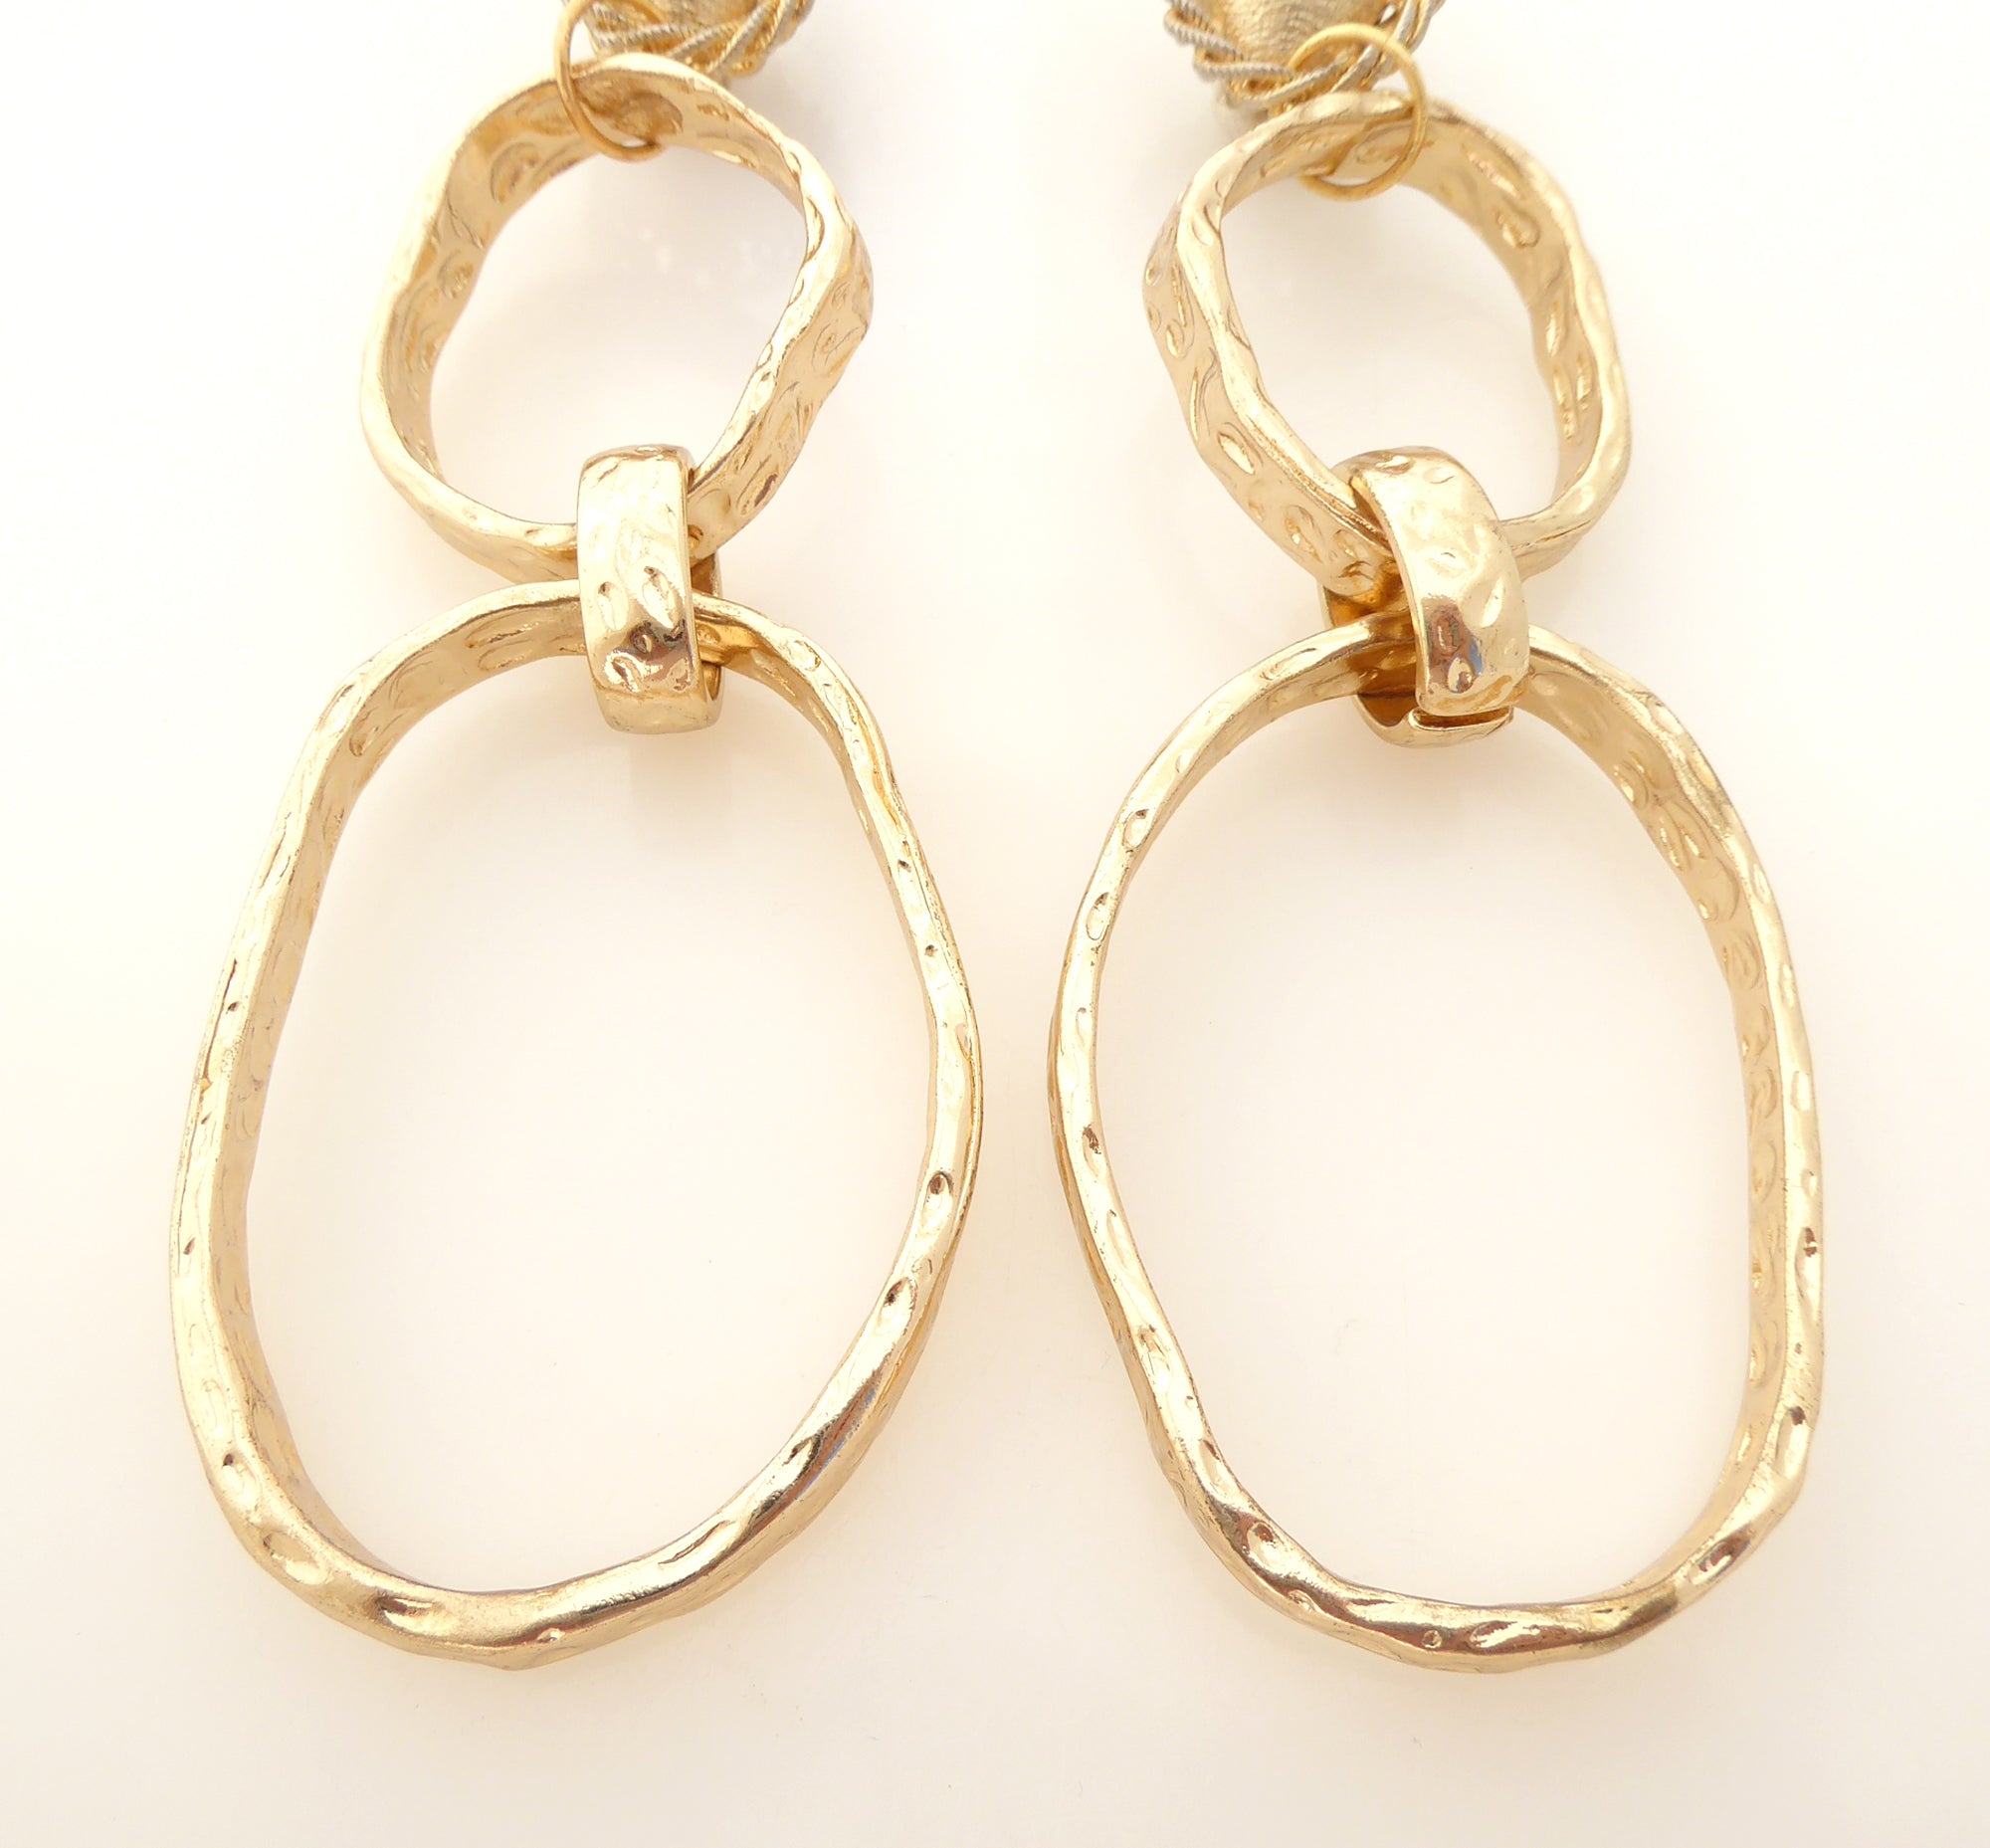 Blair hammered oval earrings